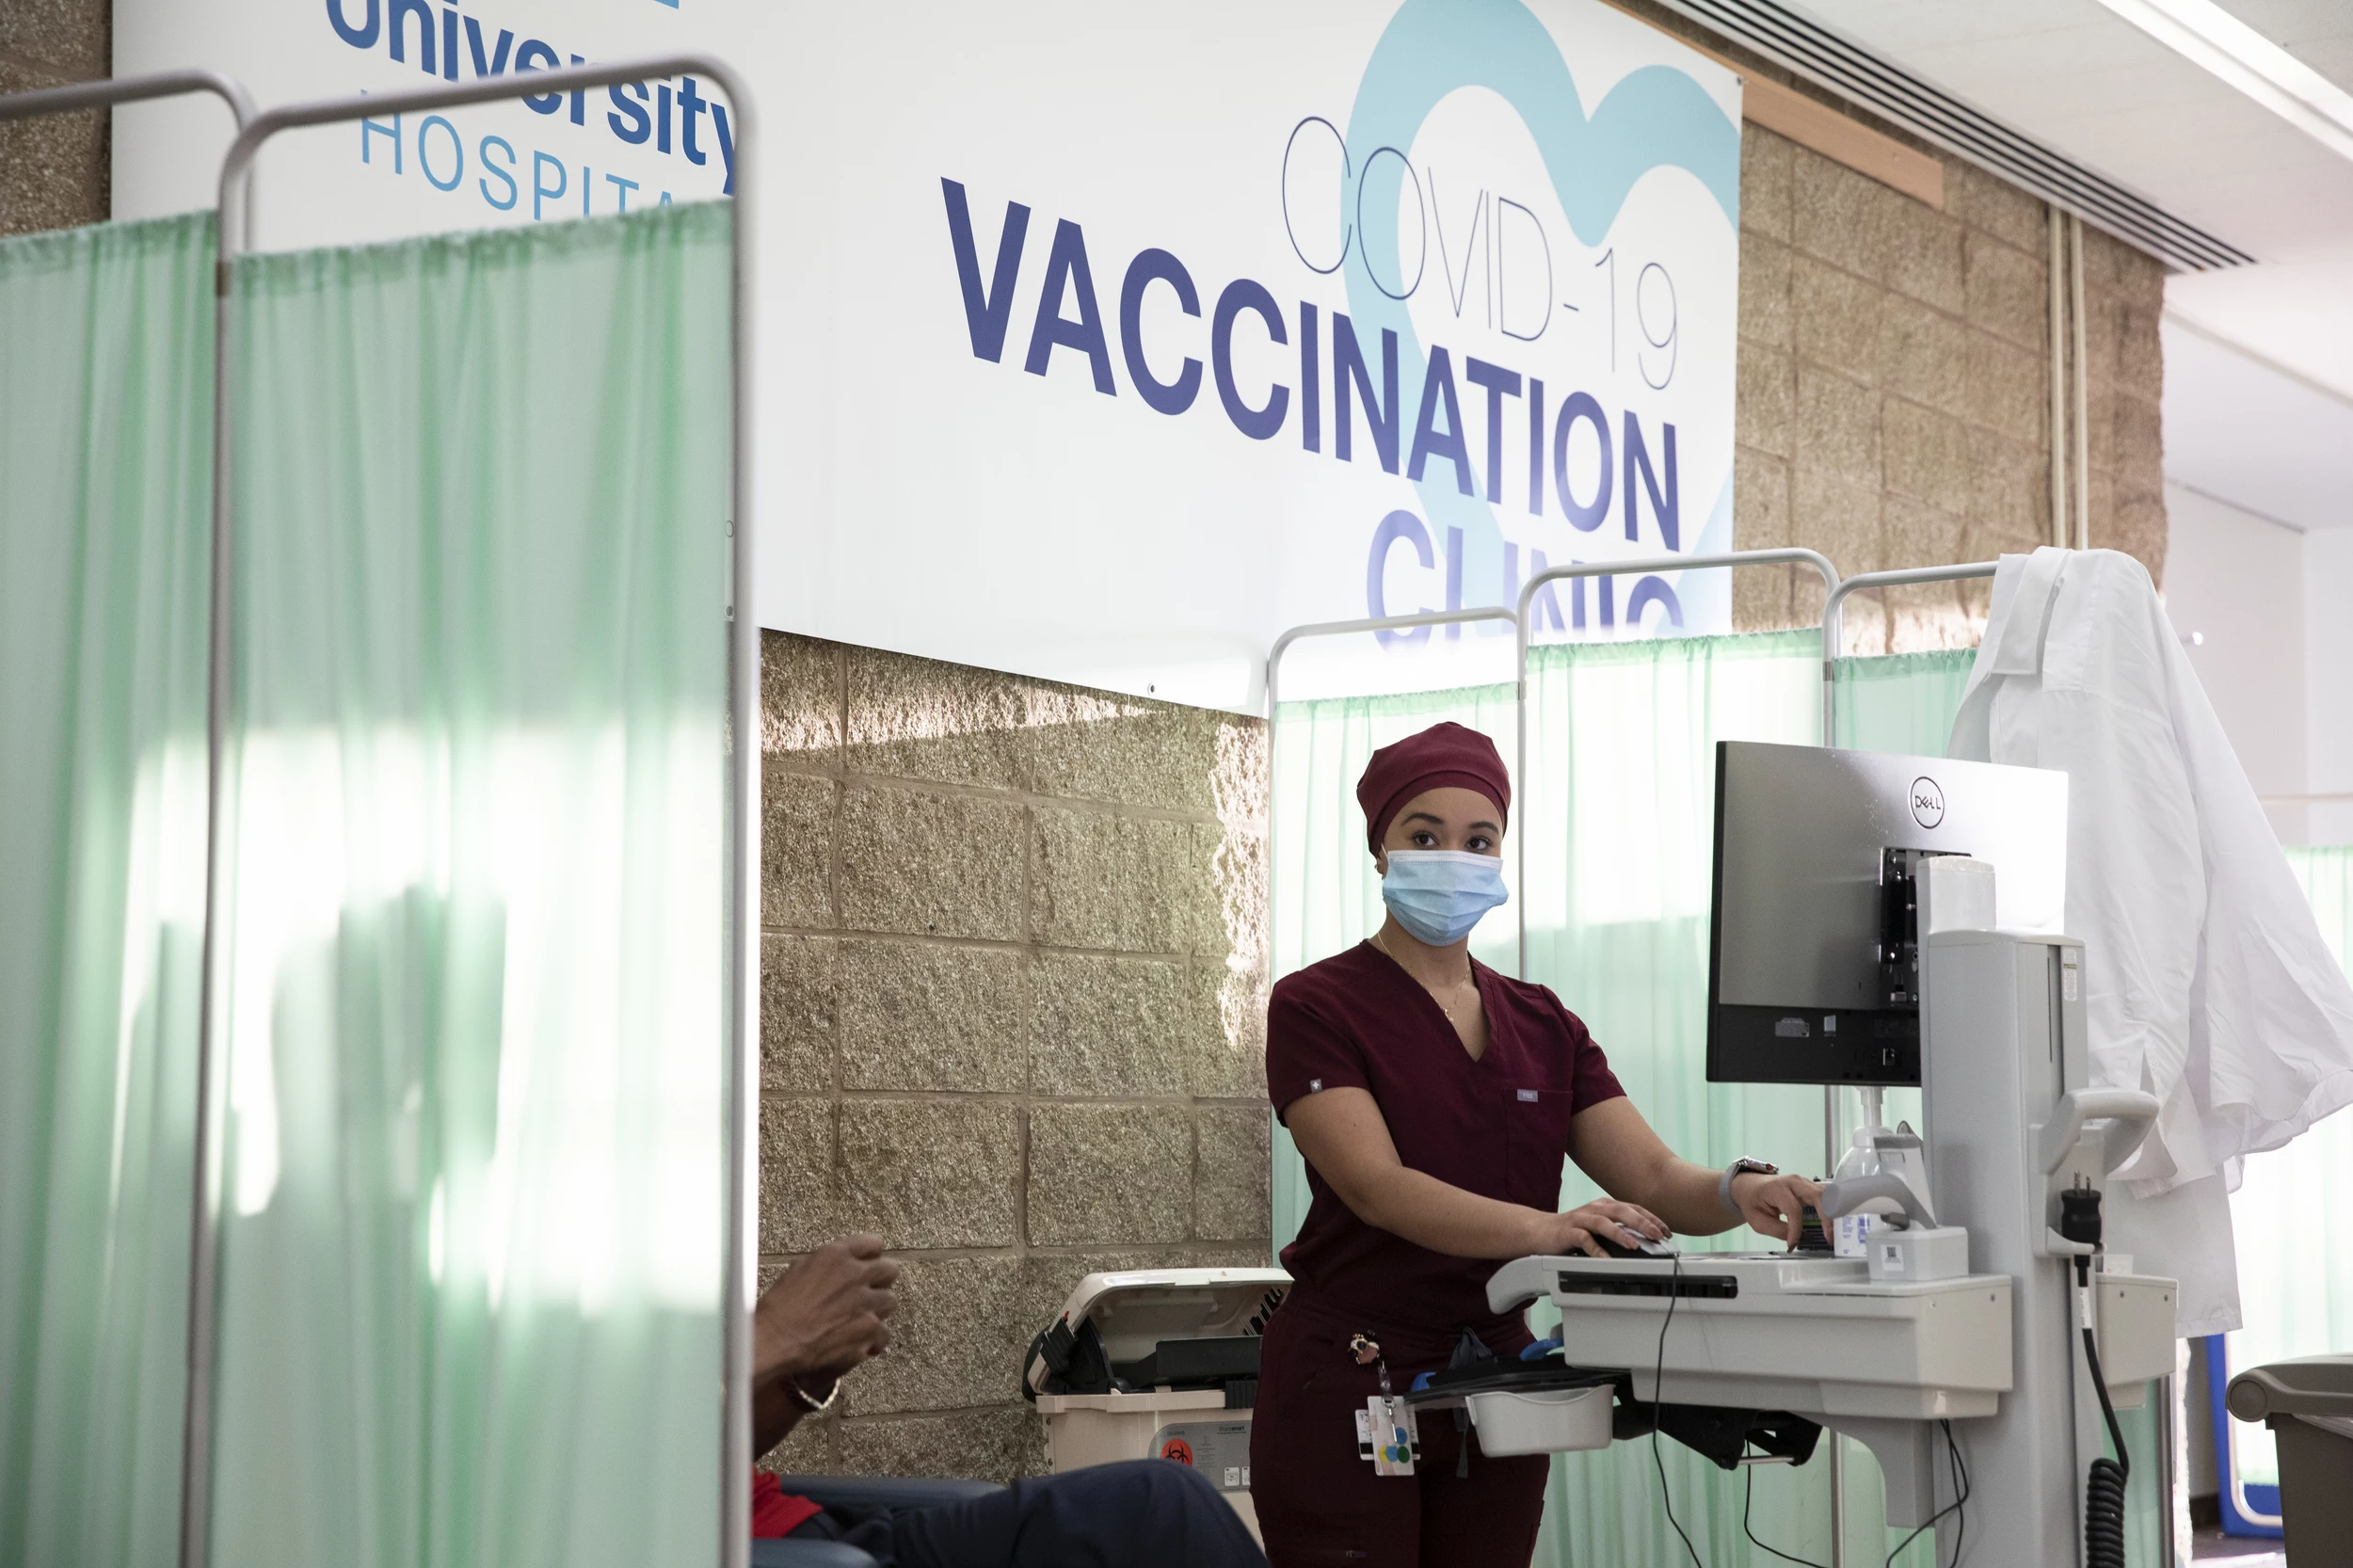 rite aid covid vaccine appointment scheduler